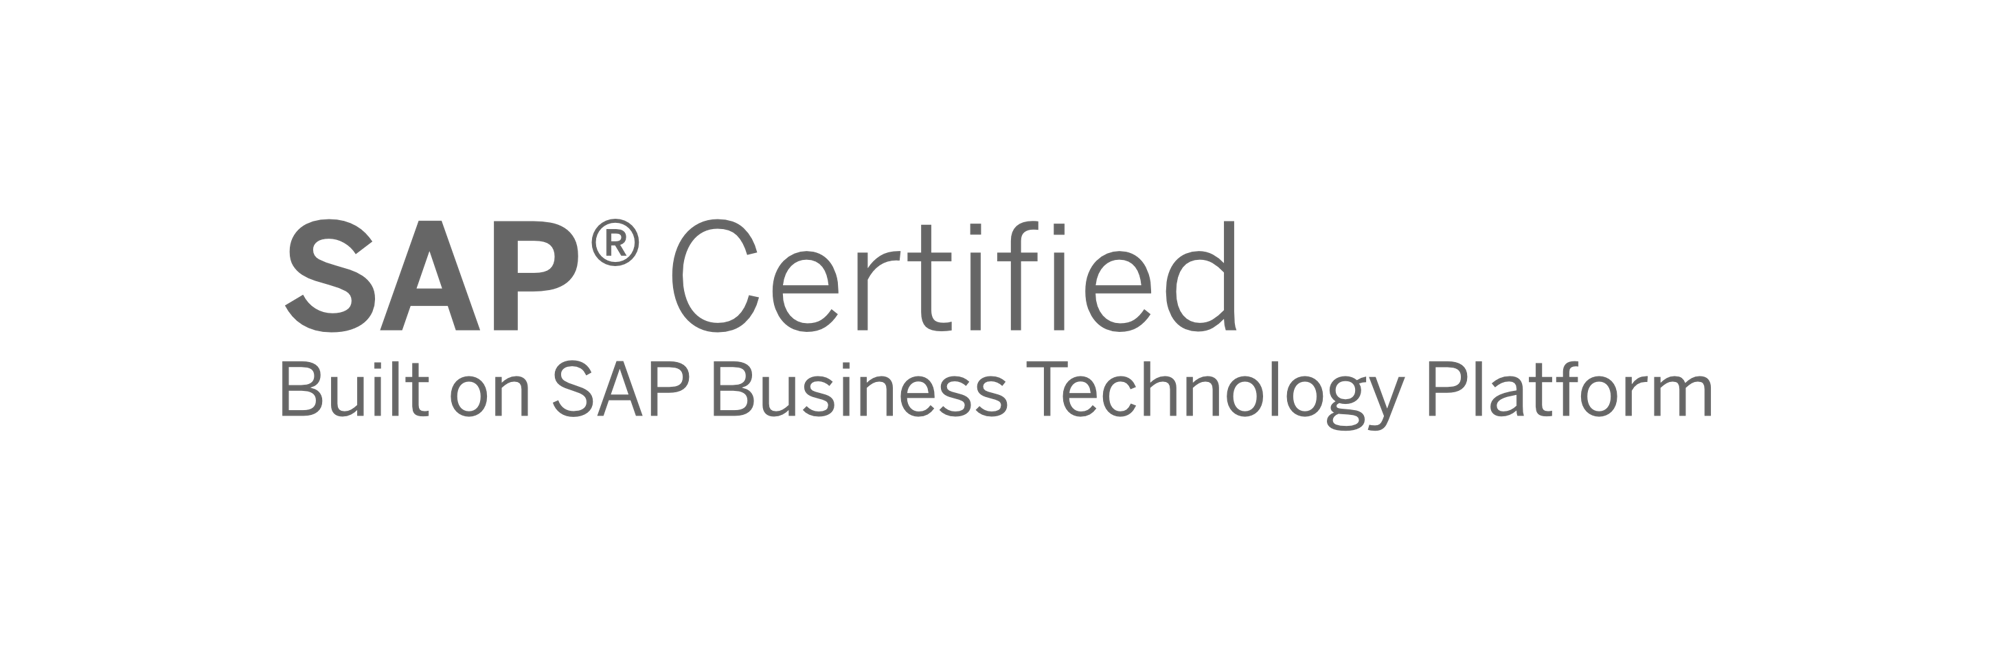 SAP® Certification